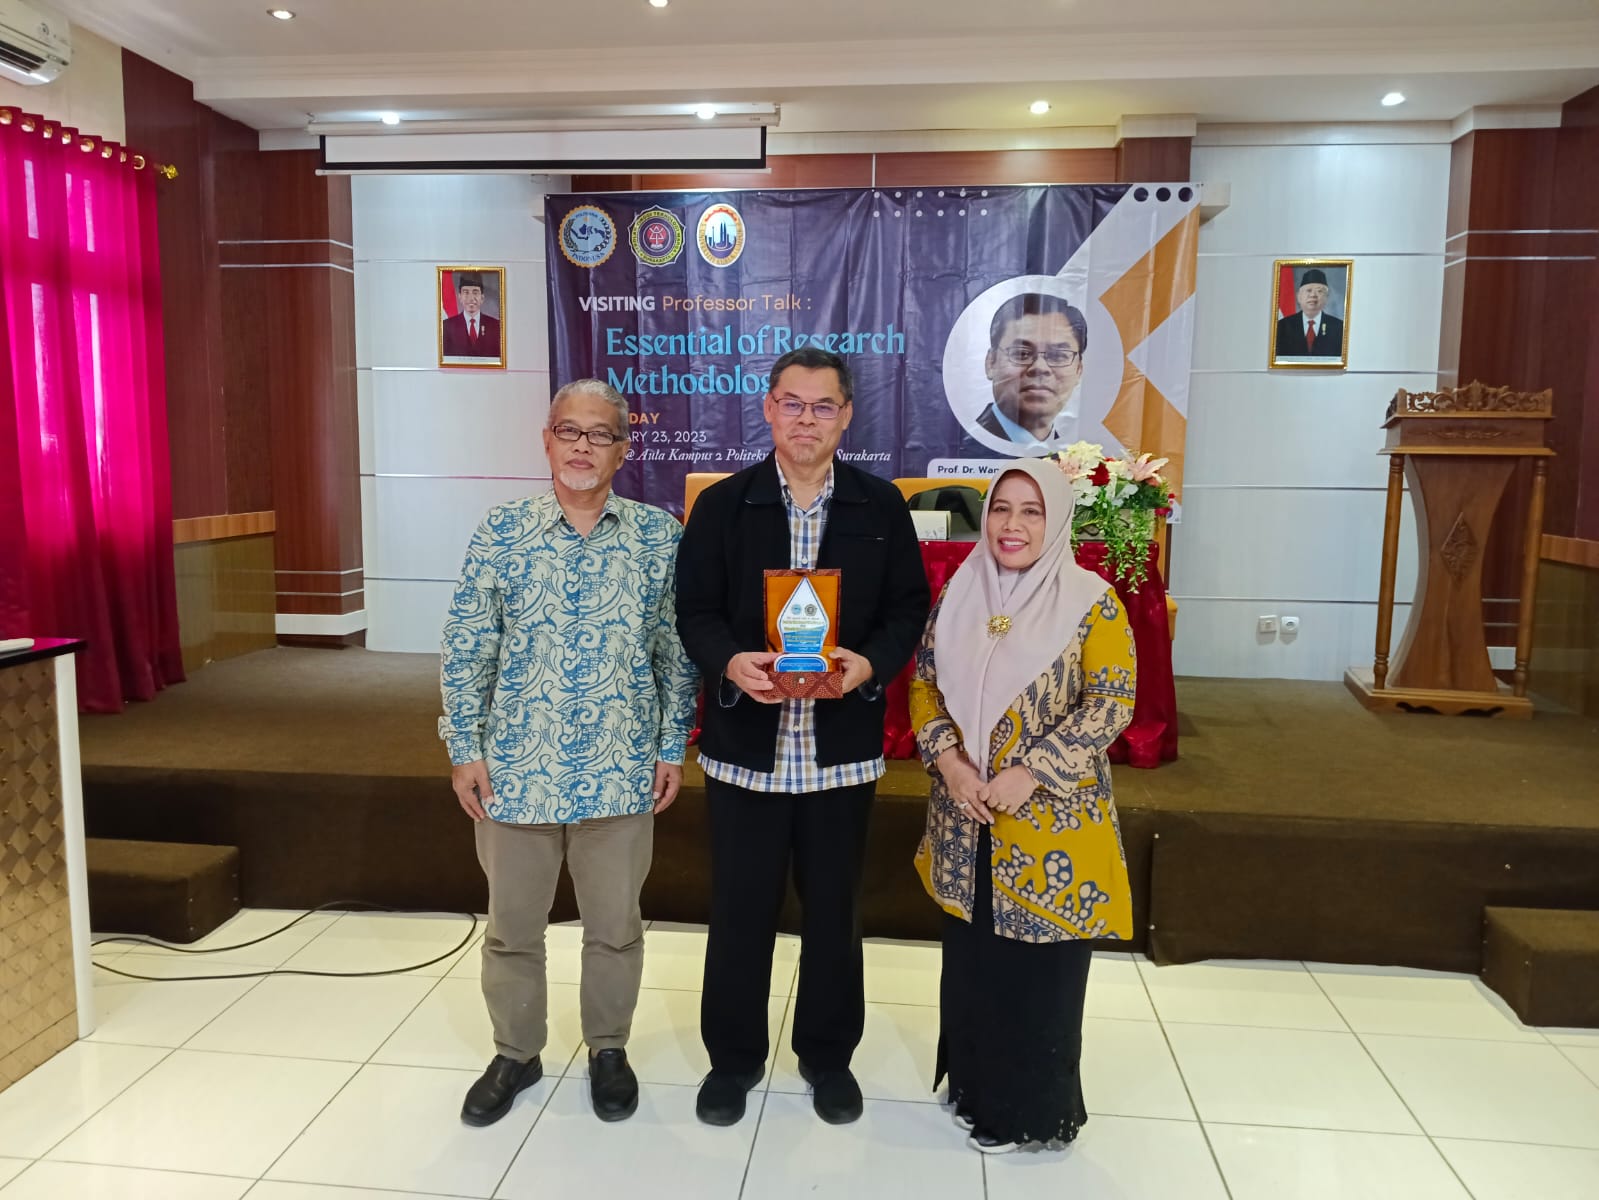 Berkolaborasi dengan STT Warga, Politeknik Indonusa Surakarta Gelar Focus Group Discussion Bertema “Essential of Research Methodology”